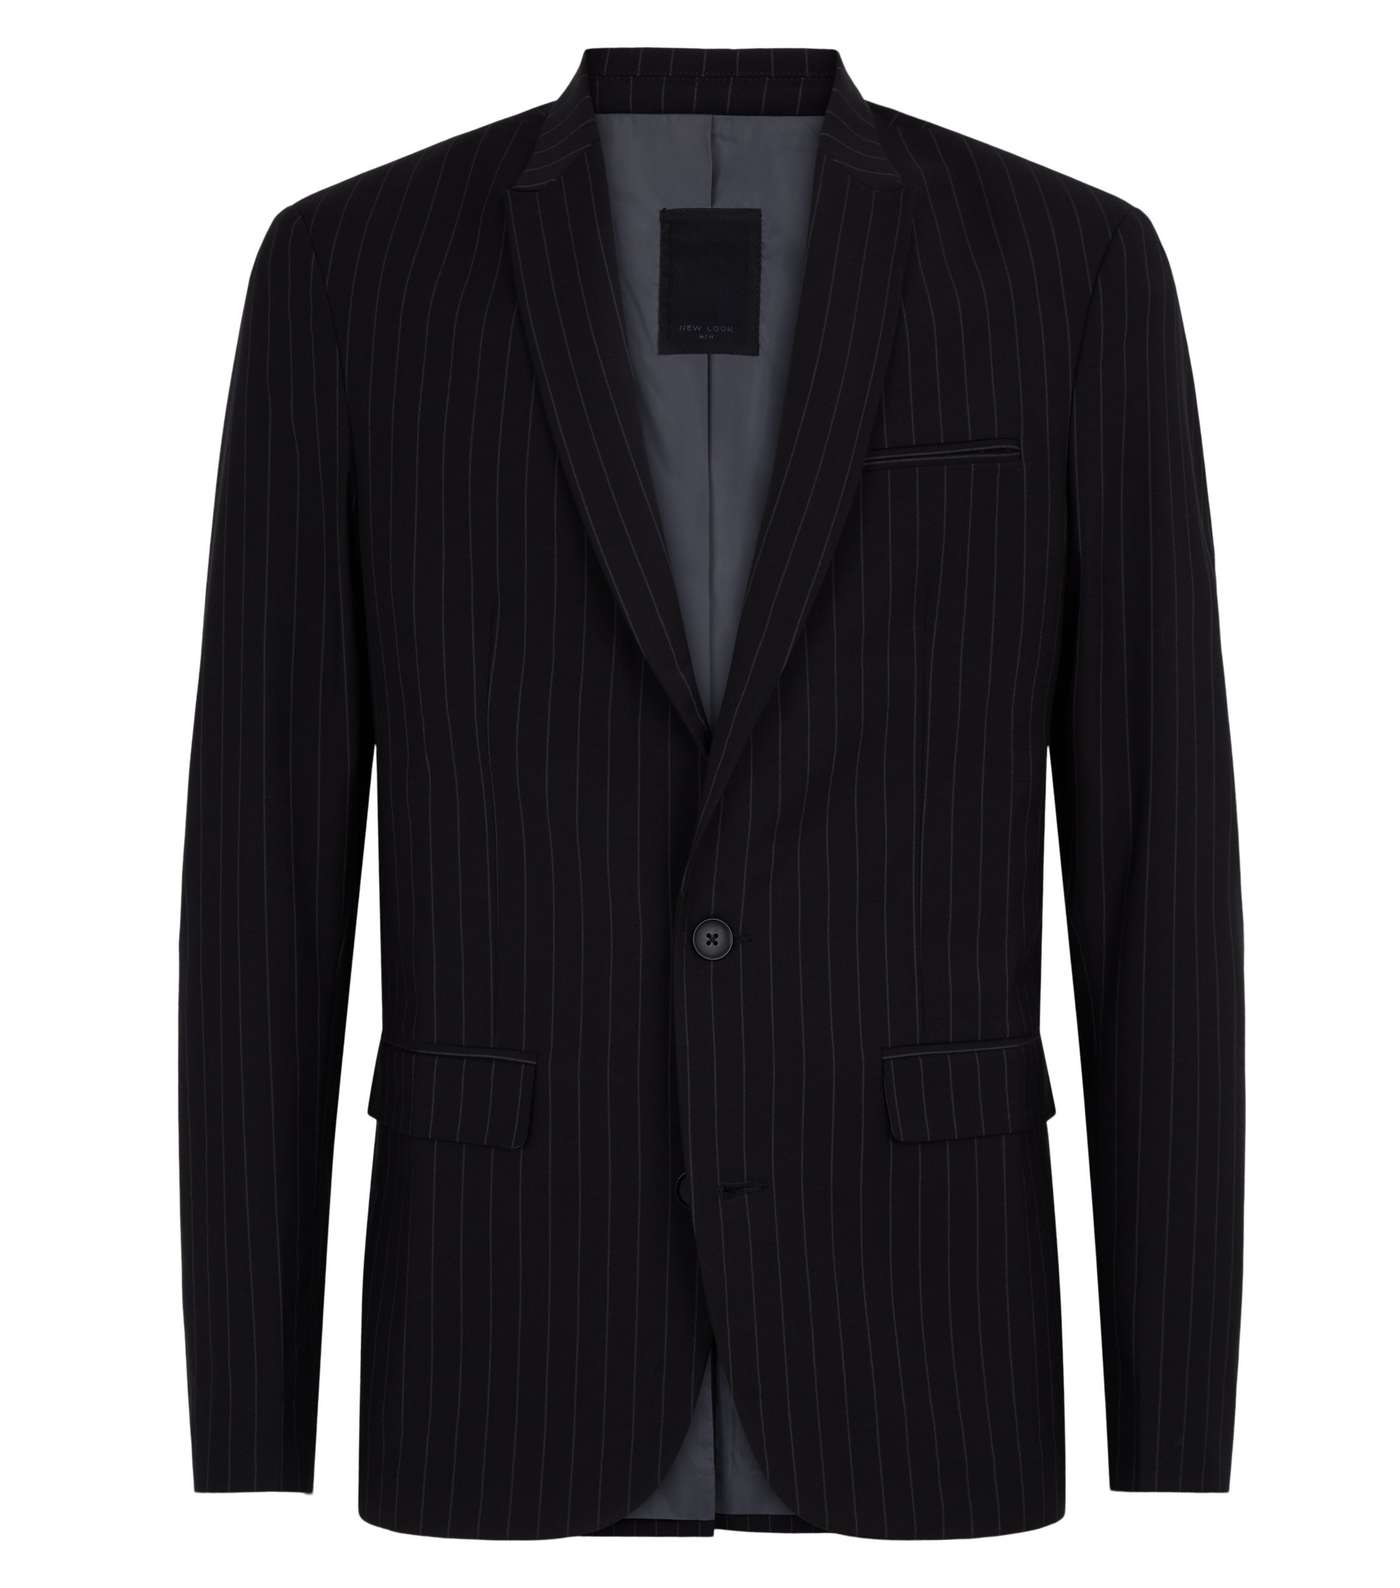 Black Pinstripe Suit Jacket